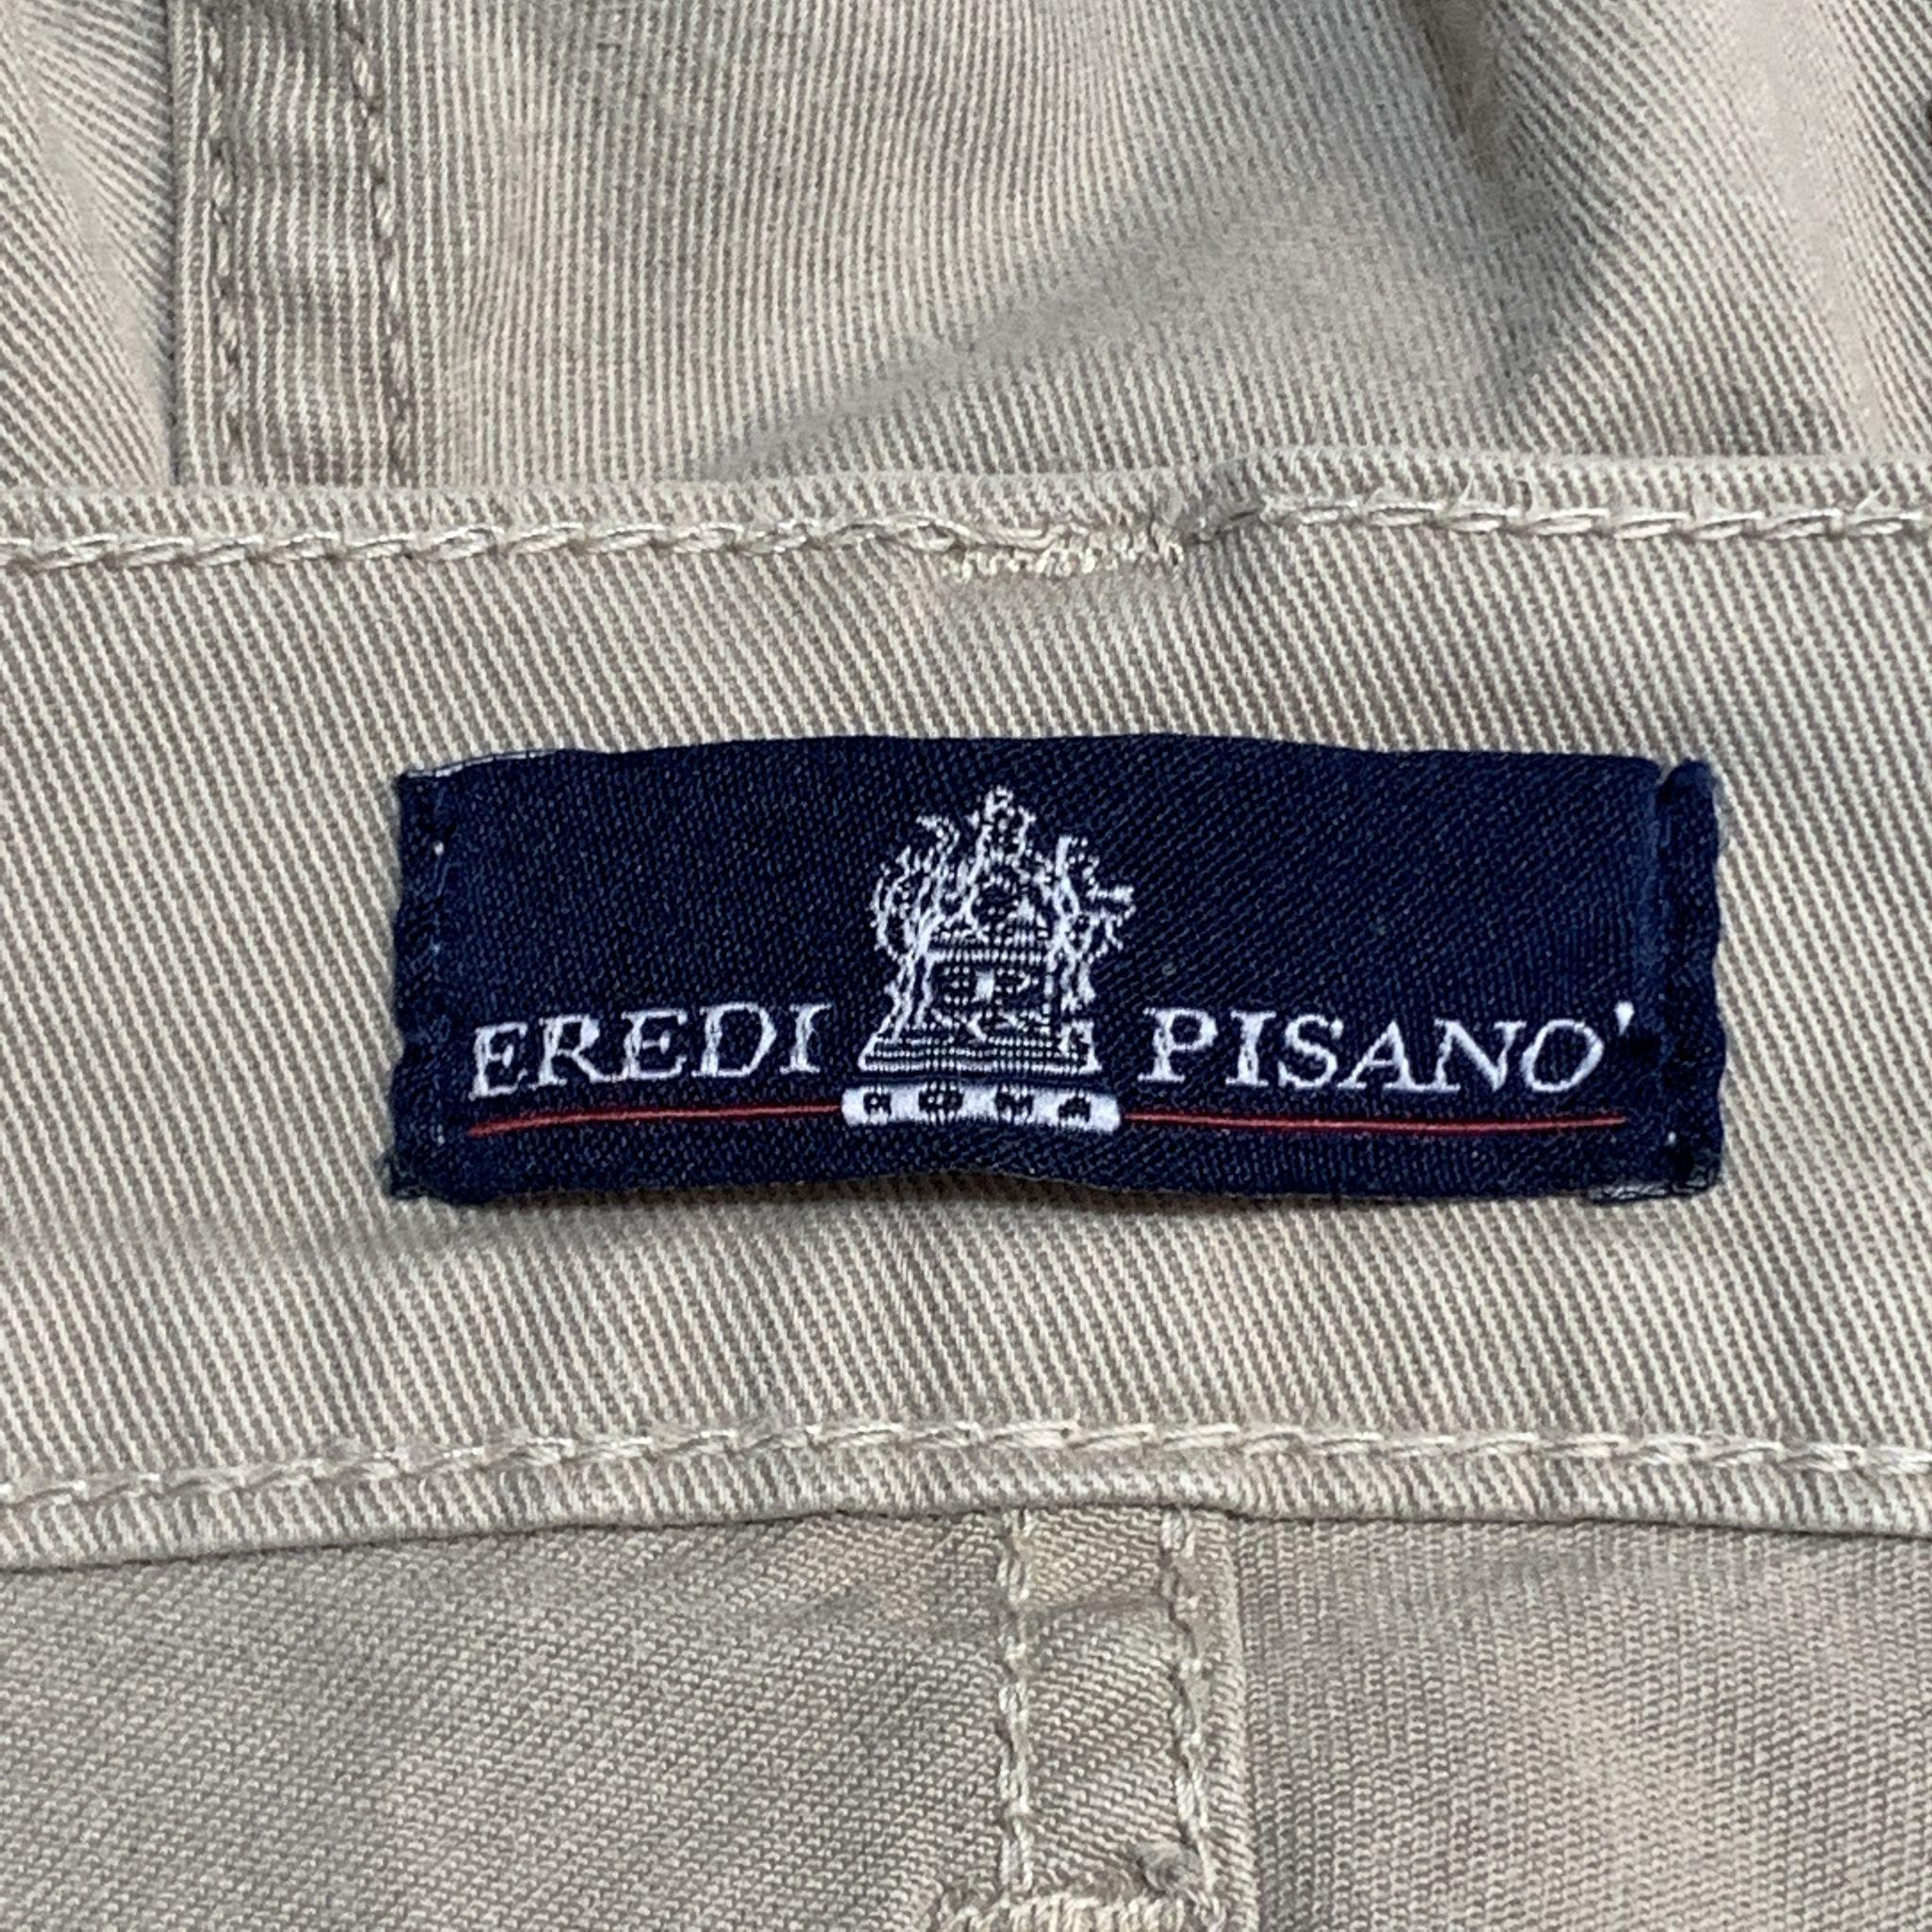 Men's EREDI PISANO Size 34 x 33 Taupe Cotton Casual Pants